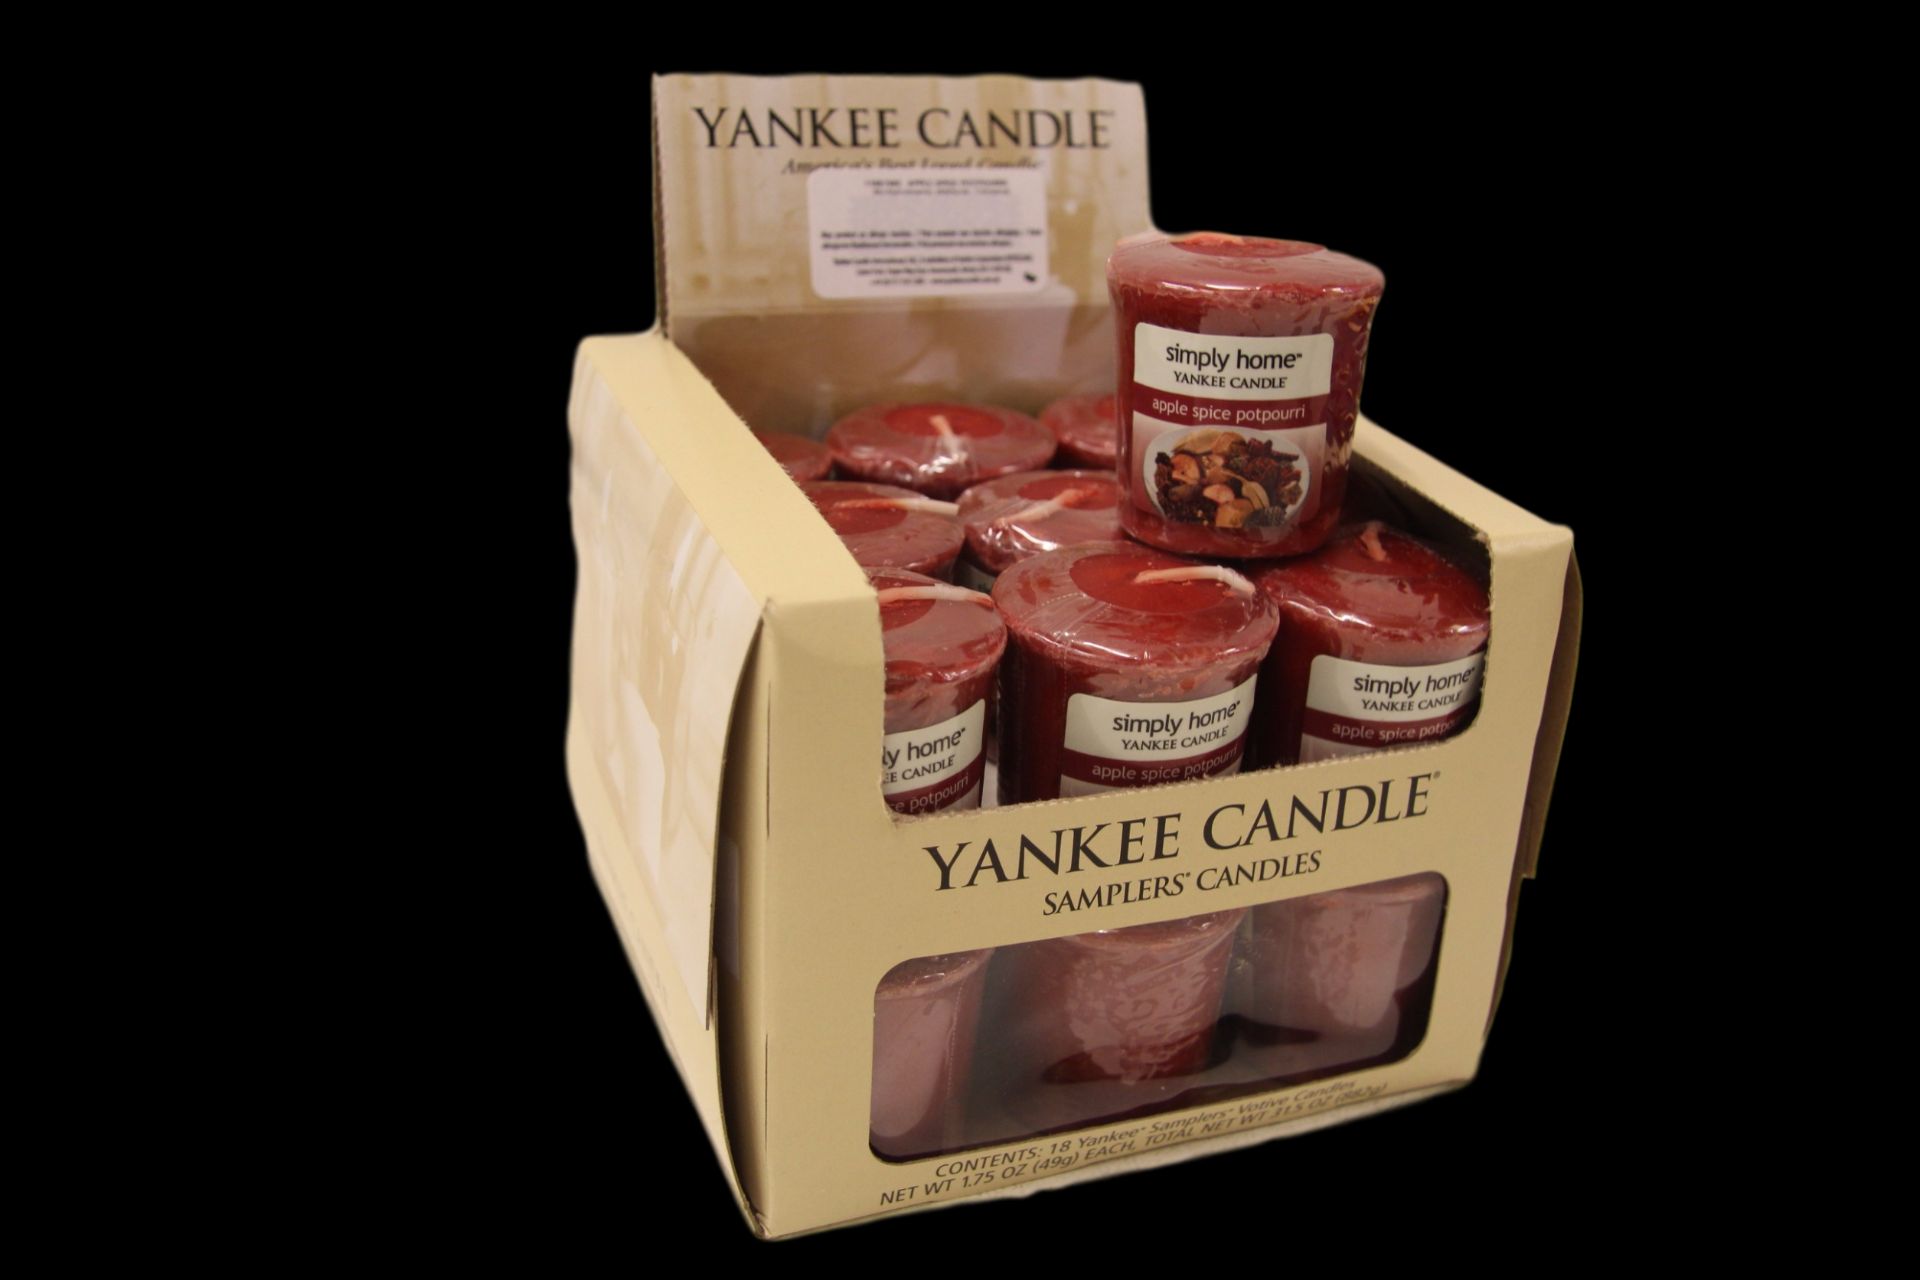 V *TRADE QTY* Brand New 18 x Yankee Candle Apple Spice Pot Pouri 49g eBaY Price£27.00 X 5 YOUR BID